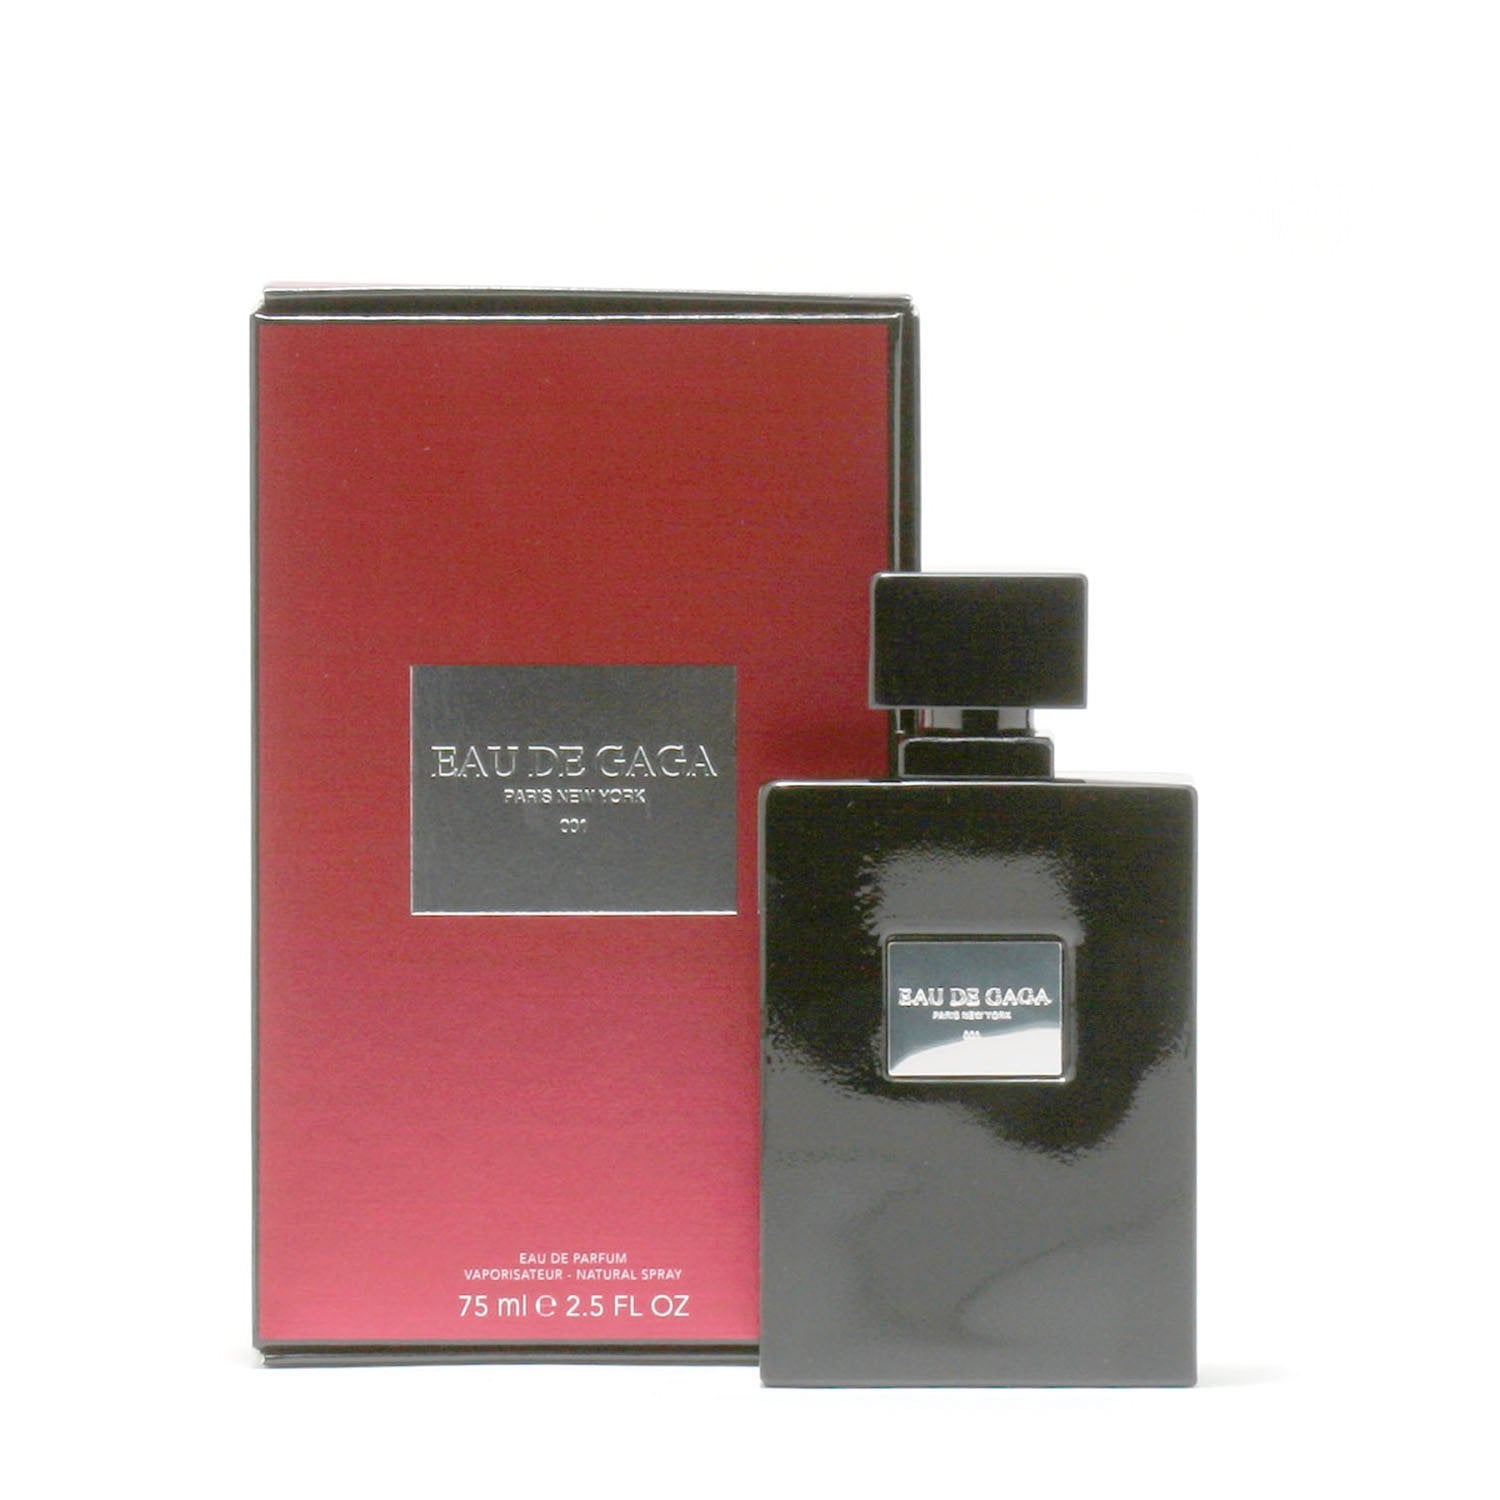 Perfume - LADY GAGA EAU DE GAGA FOR WOMEN - EAU DE PARFUM SPRAY, 2.5 OZ